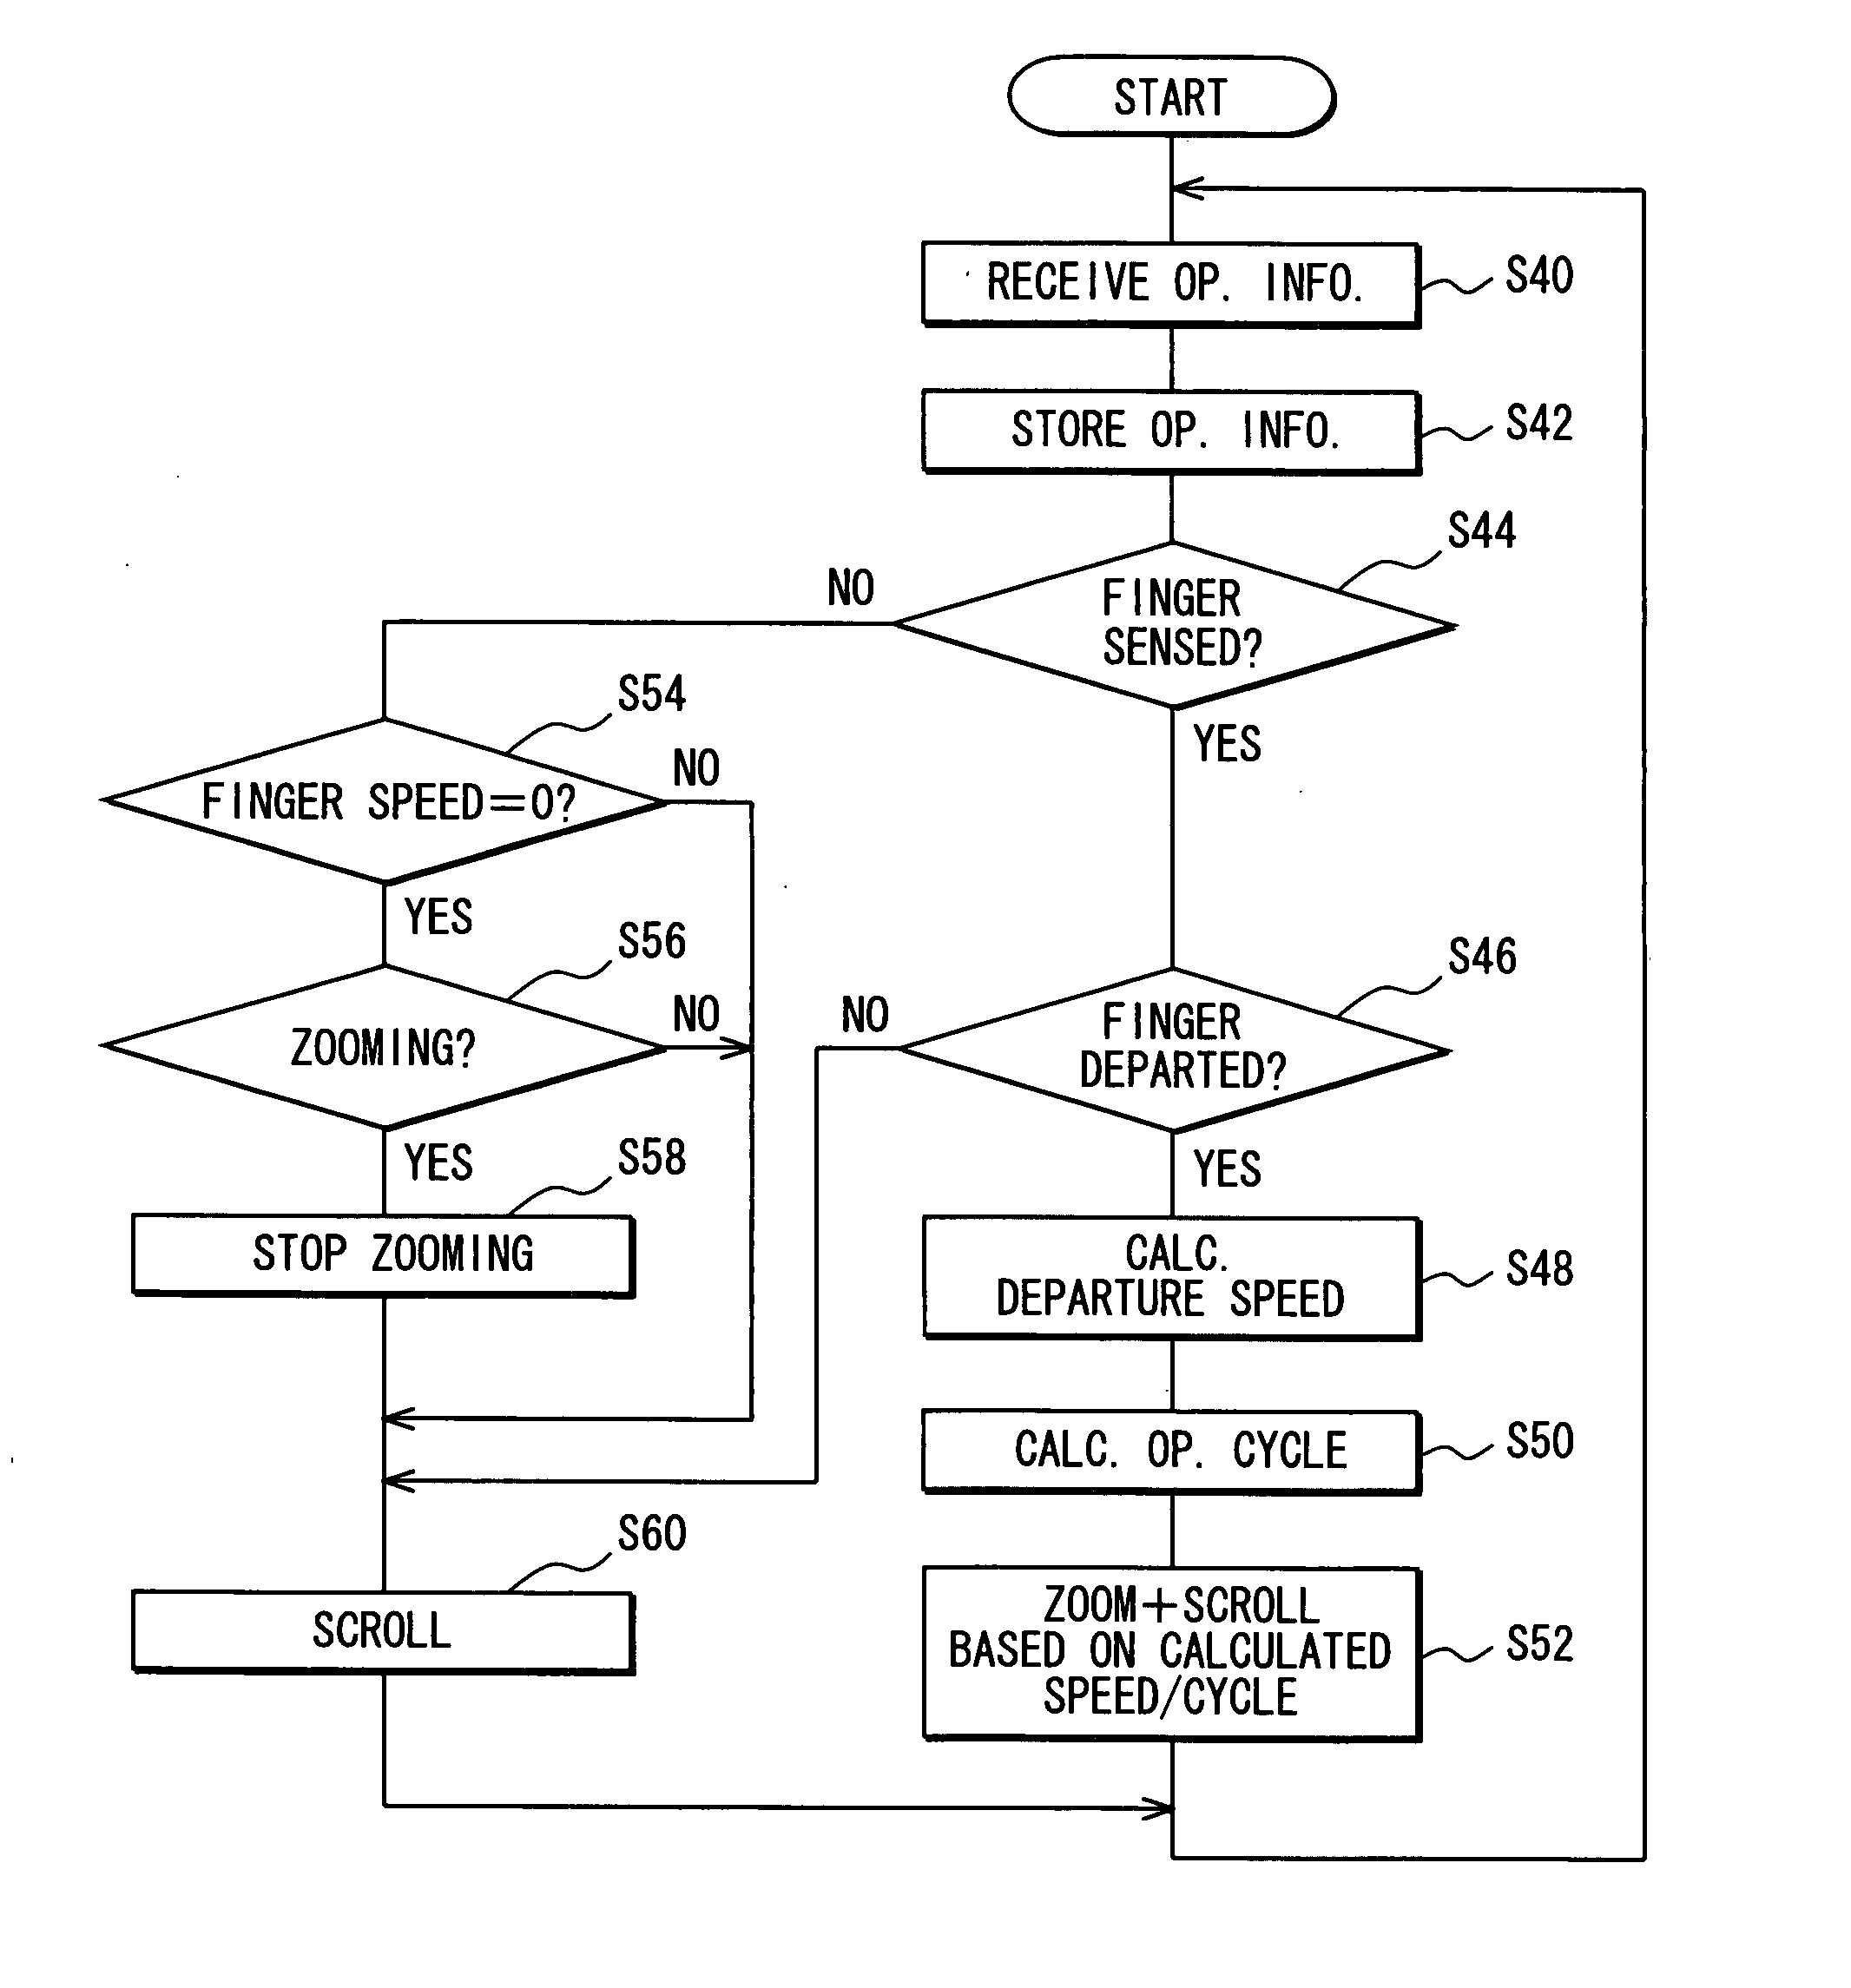 Display apparatus and method, program of controlling same